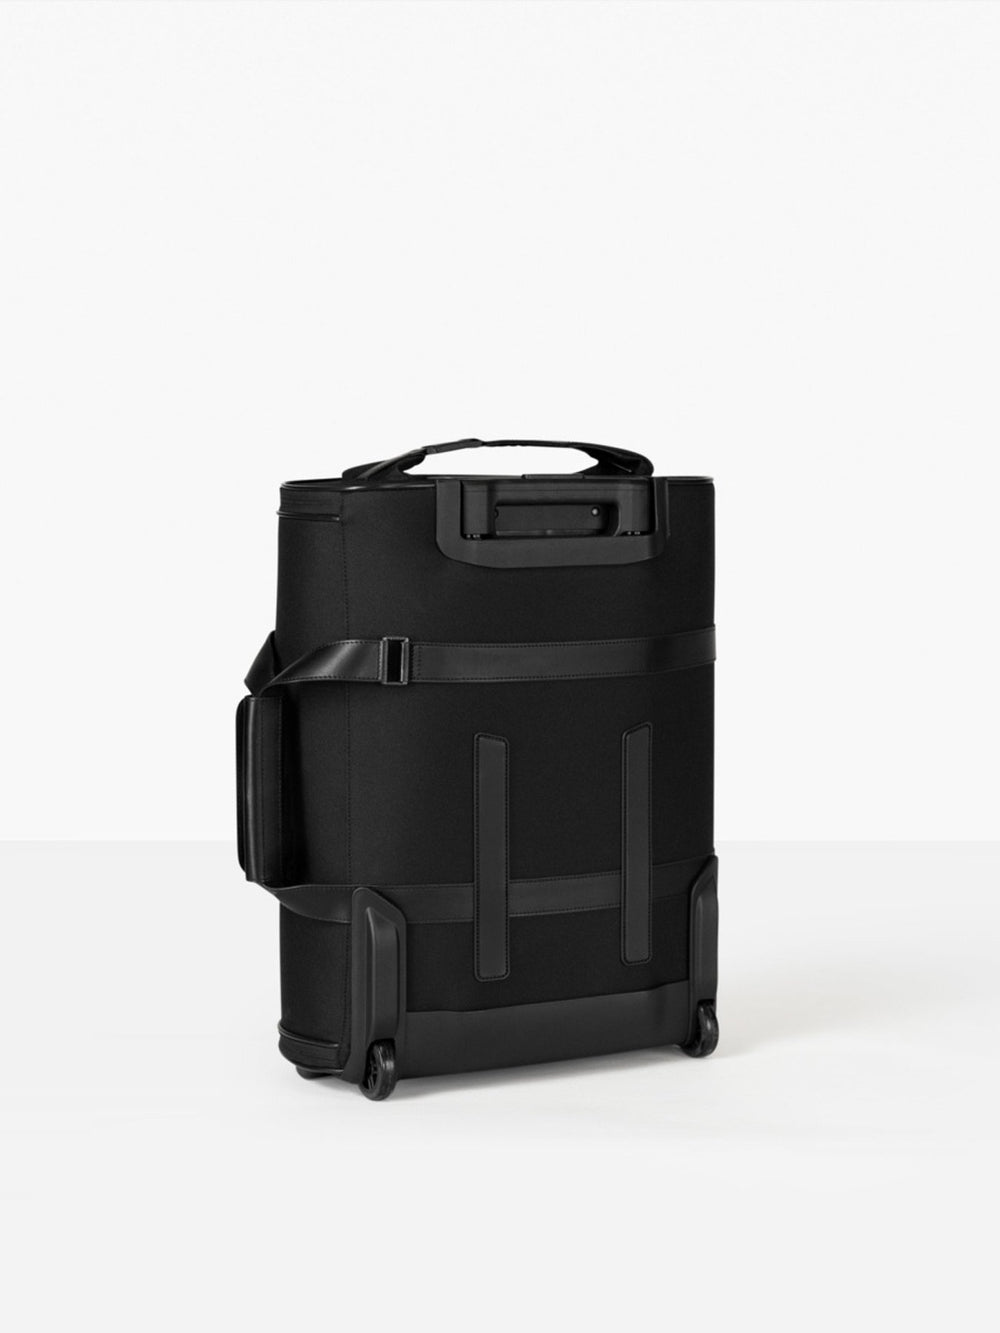 Garment bag carry on C38 | VOCIER Luggage